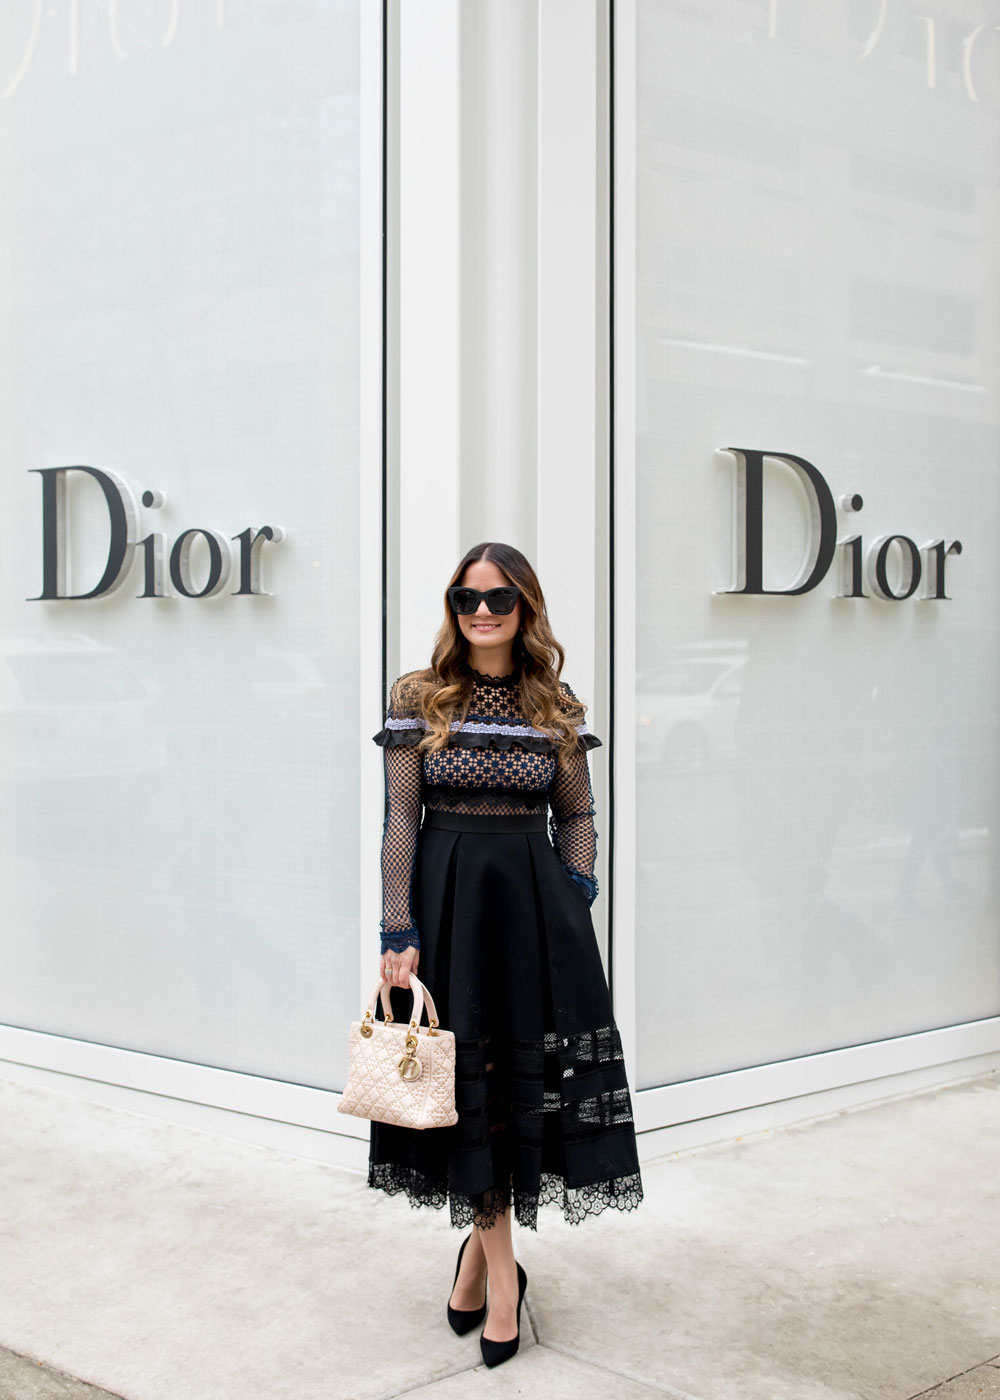 Christian Dior Chicago Rush Street